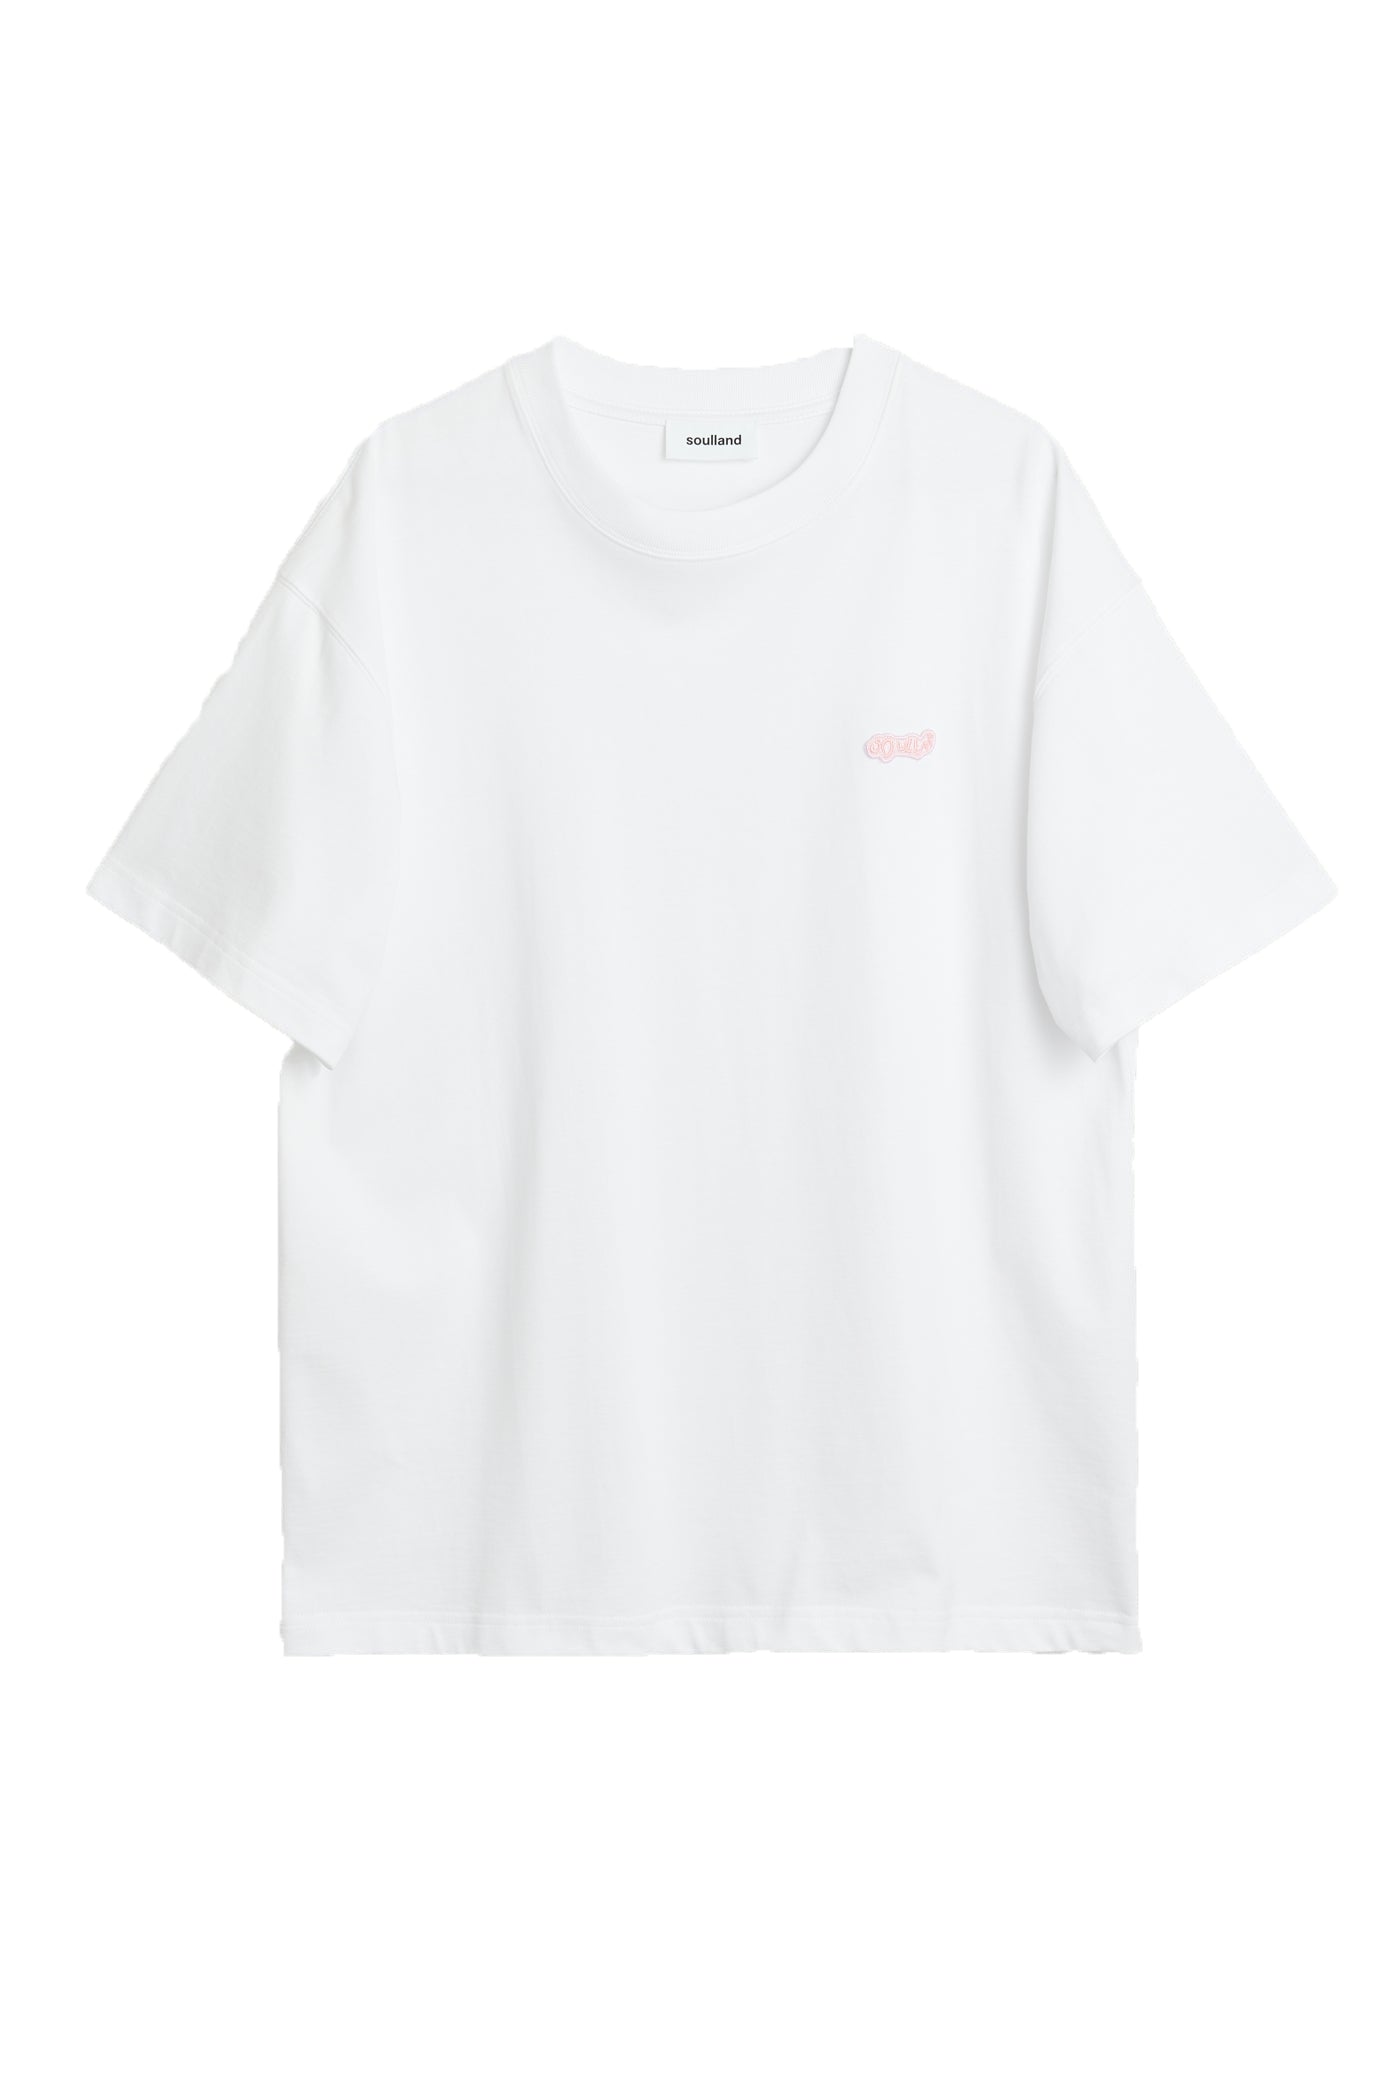 Balder Patch T-shirt White